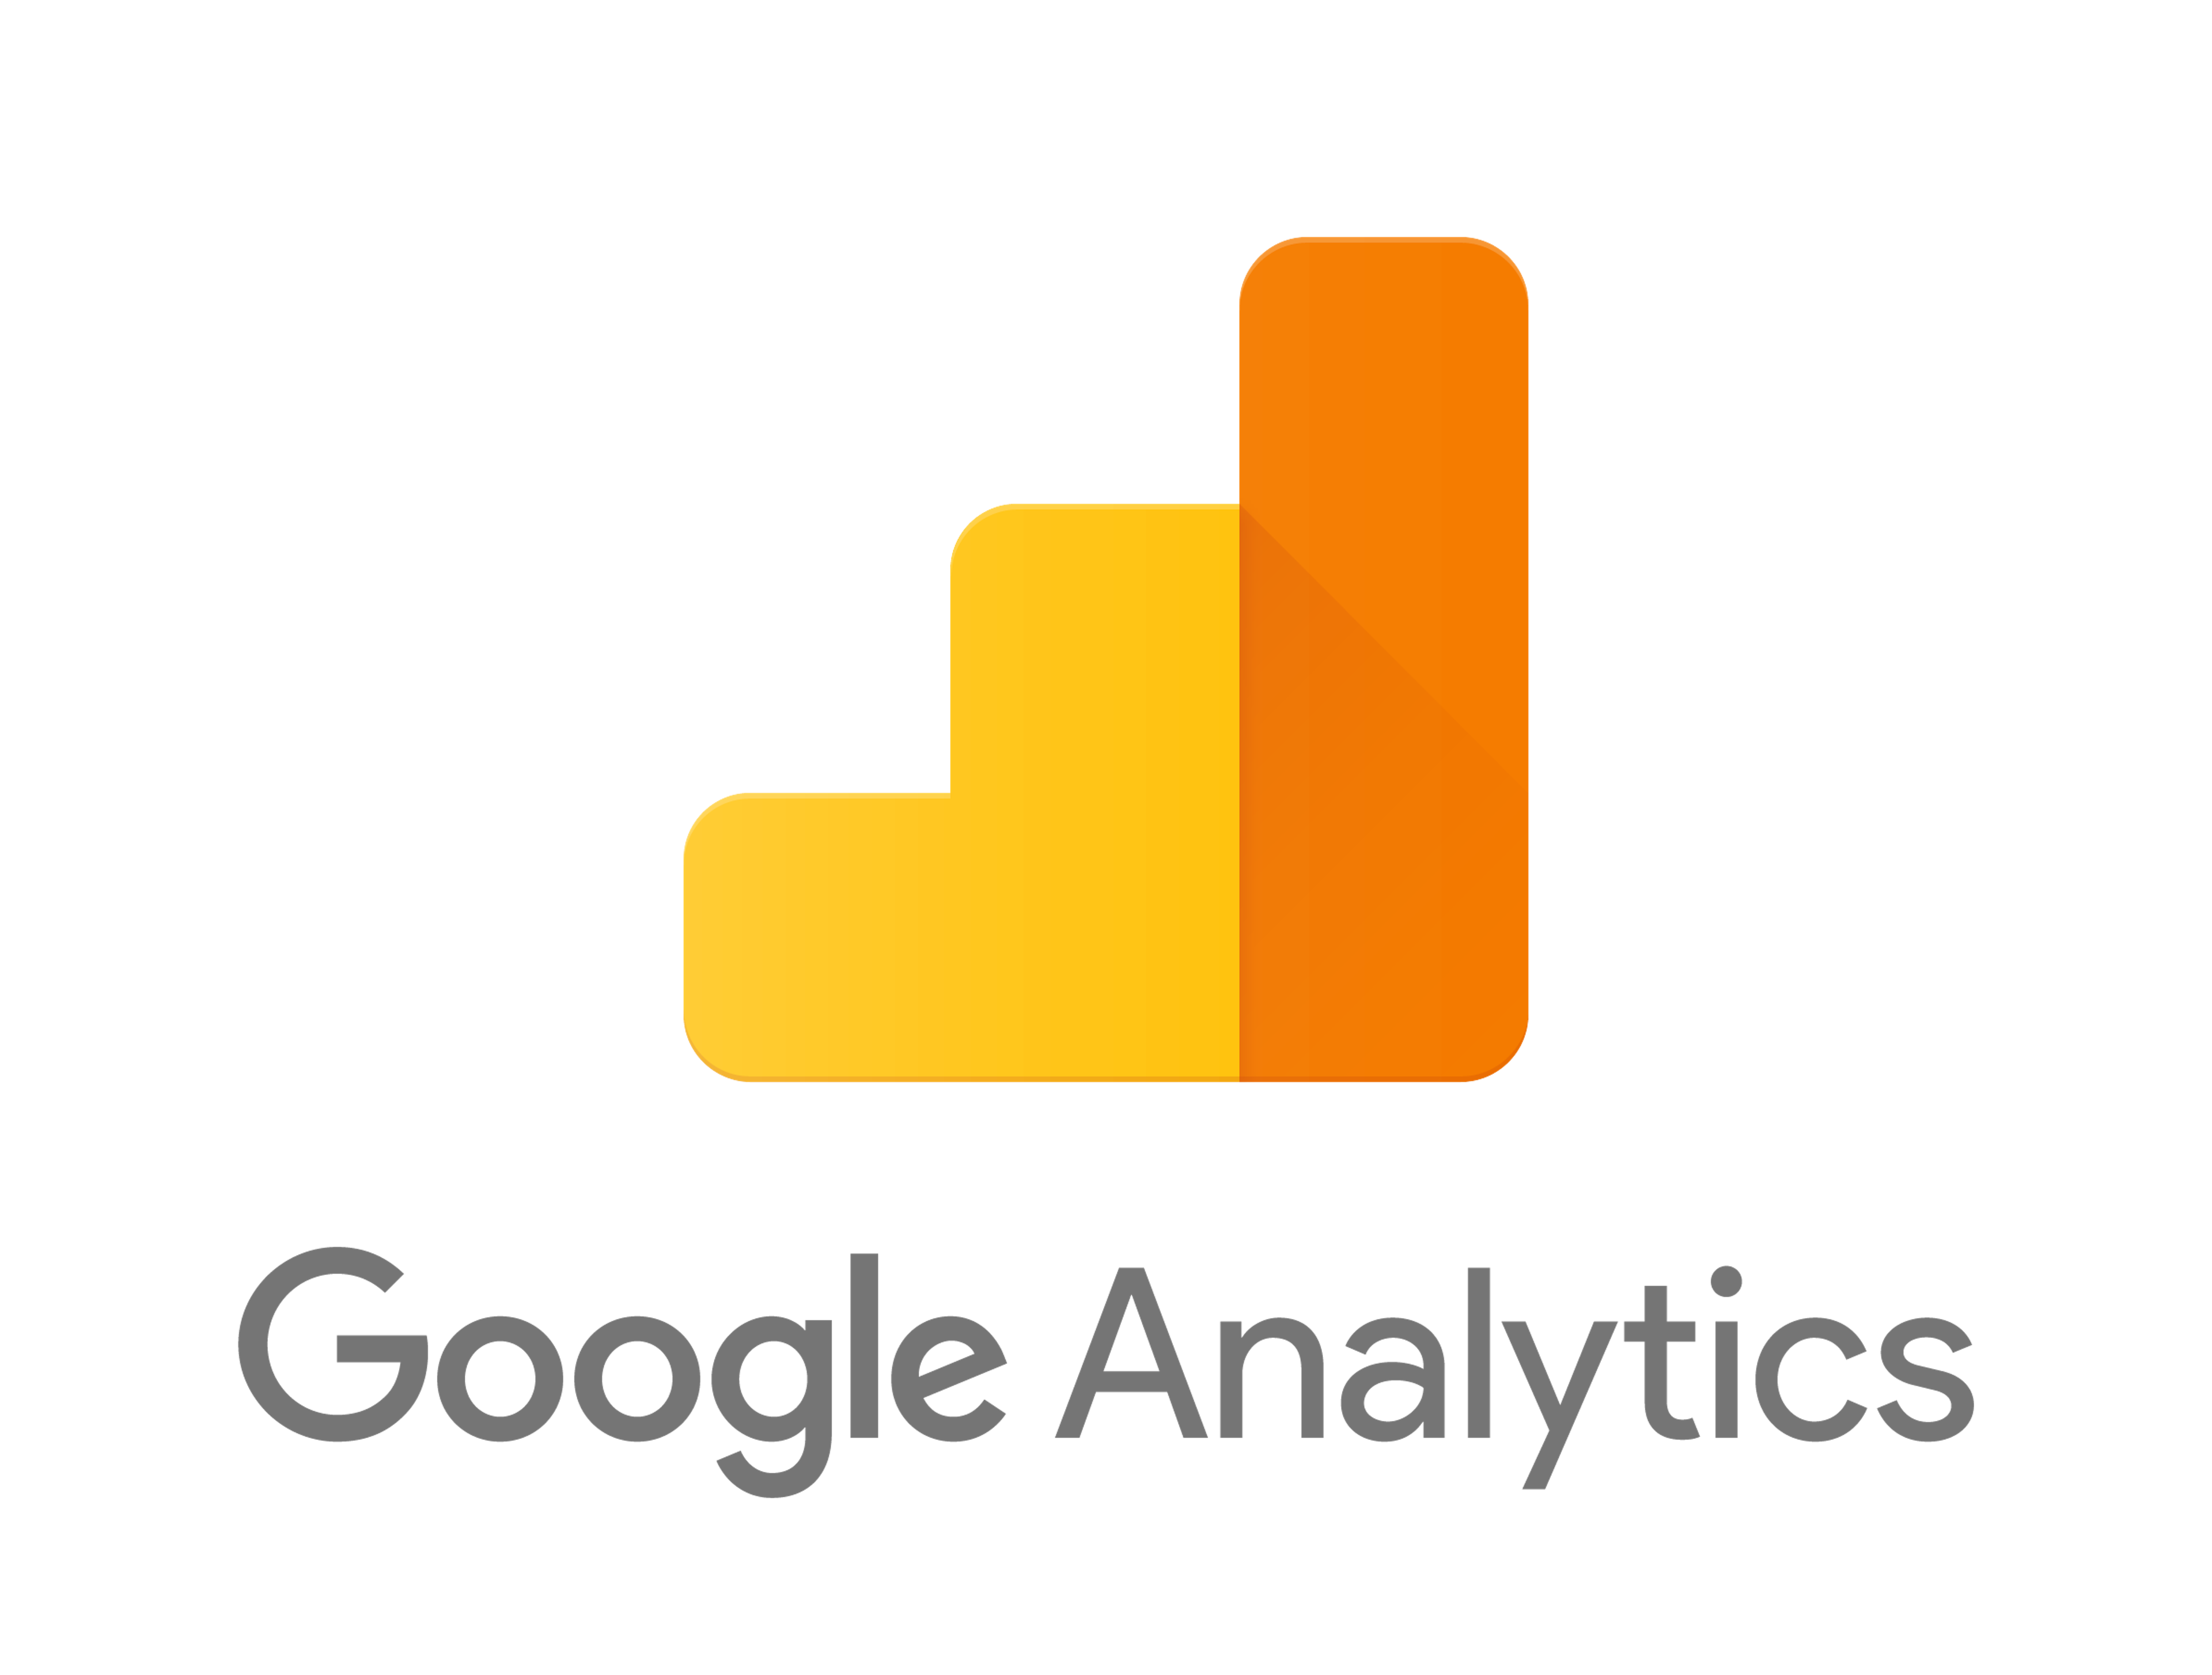 Google Analytics 360 Logo